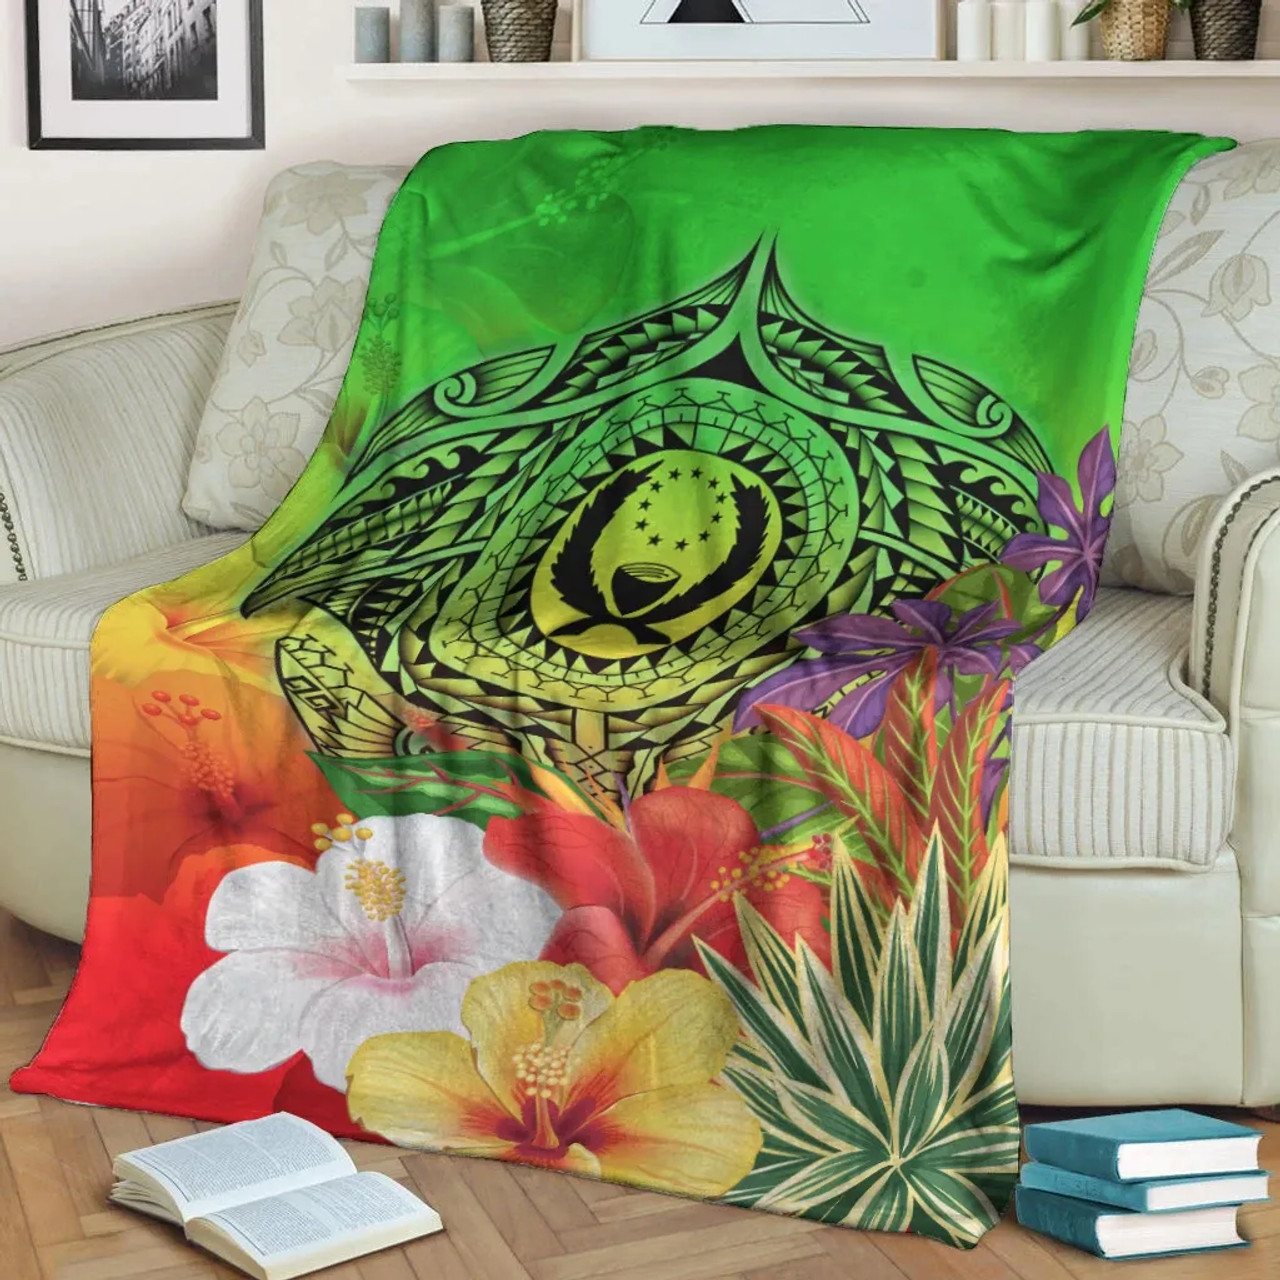 Pohnpei Premium Blanket - Manta Ray Tropical Flowers (Green) 3